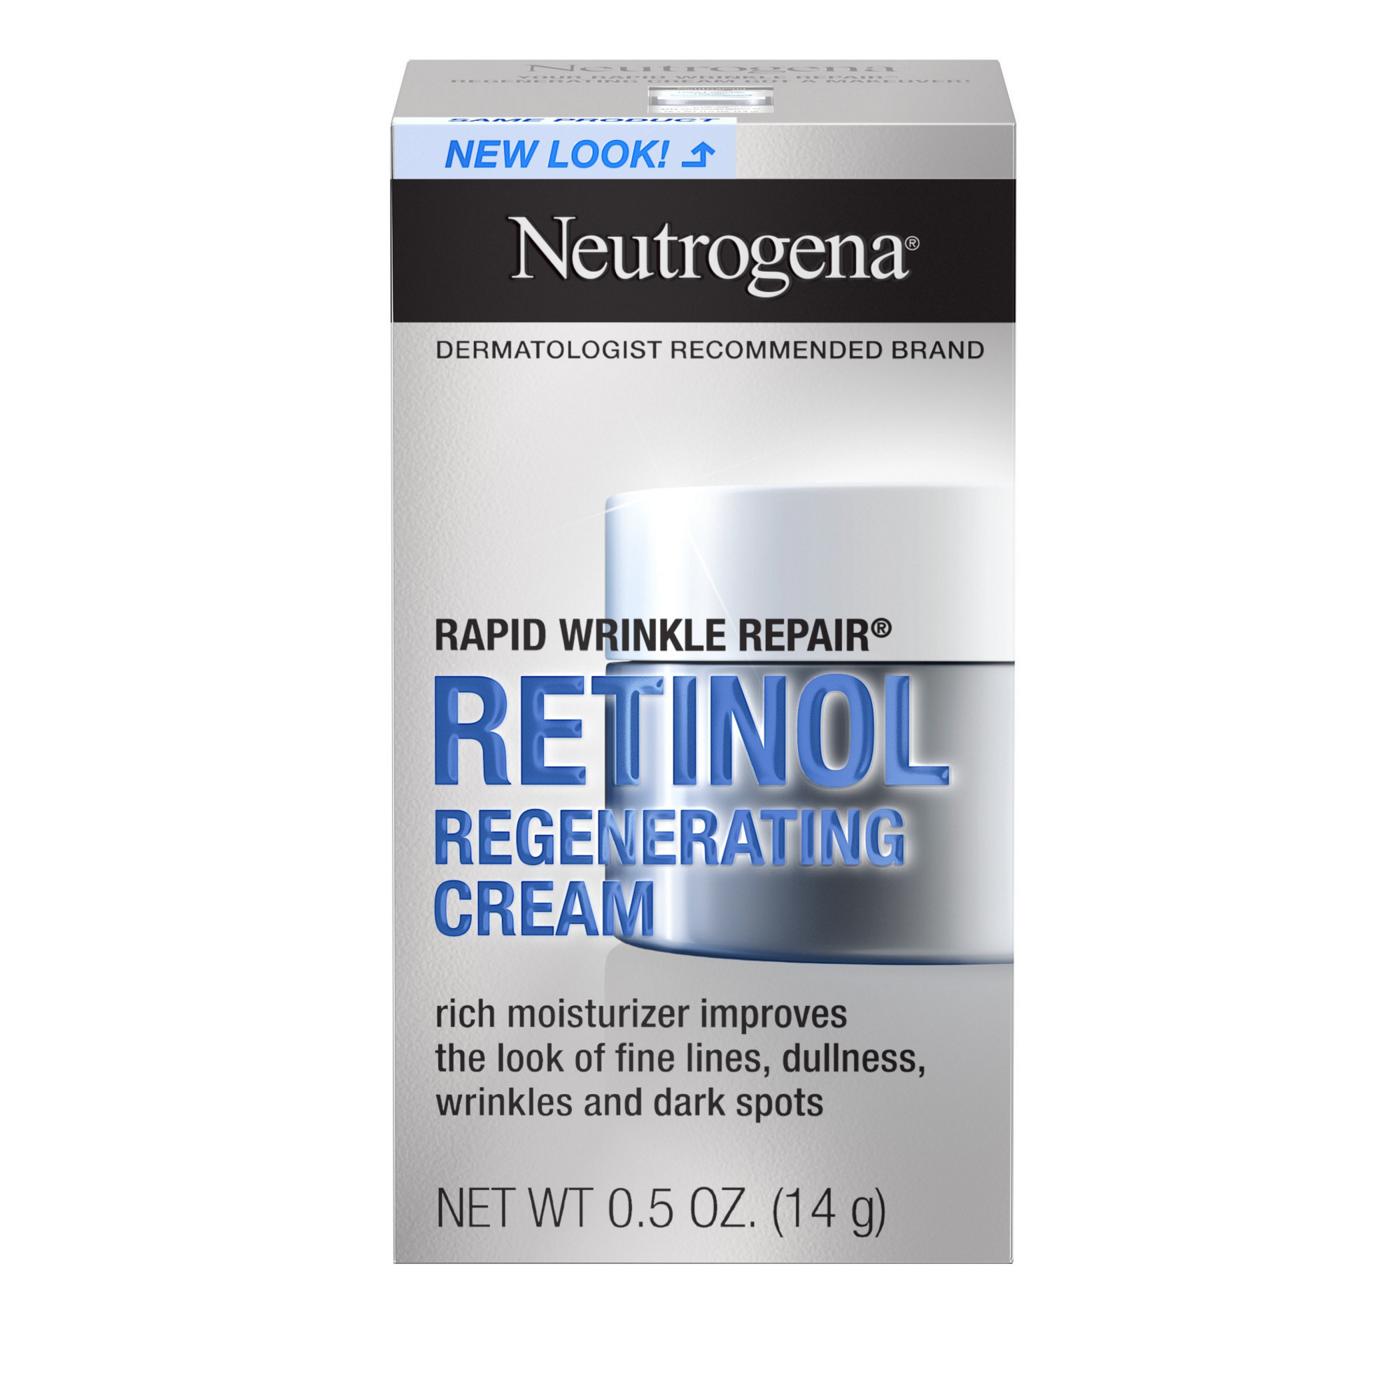 Neutrogena Rapid Wrinkle Repair Retinol Regenerating Cream; image 4 of 6